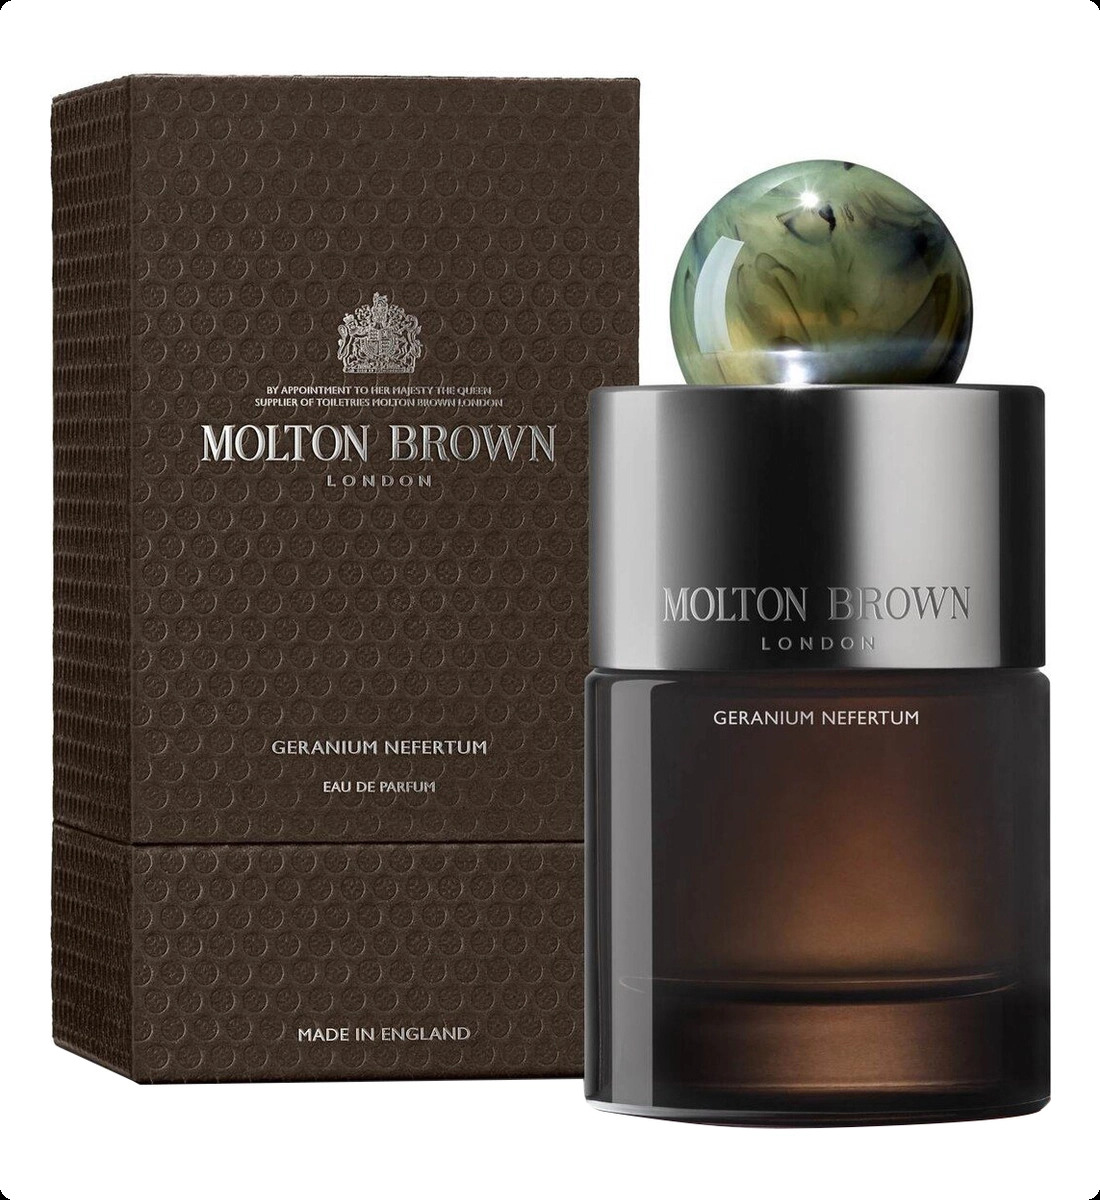 Molton Brown Geranium Nefertum Парфюмерная вода 100 мл для женщин и мужчин